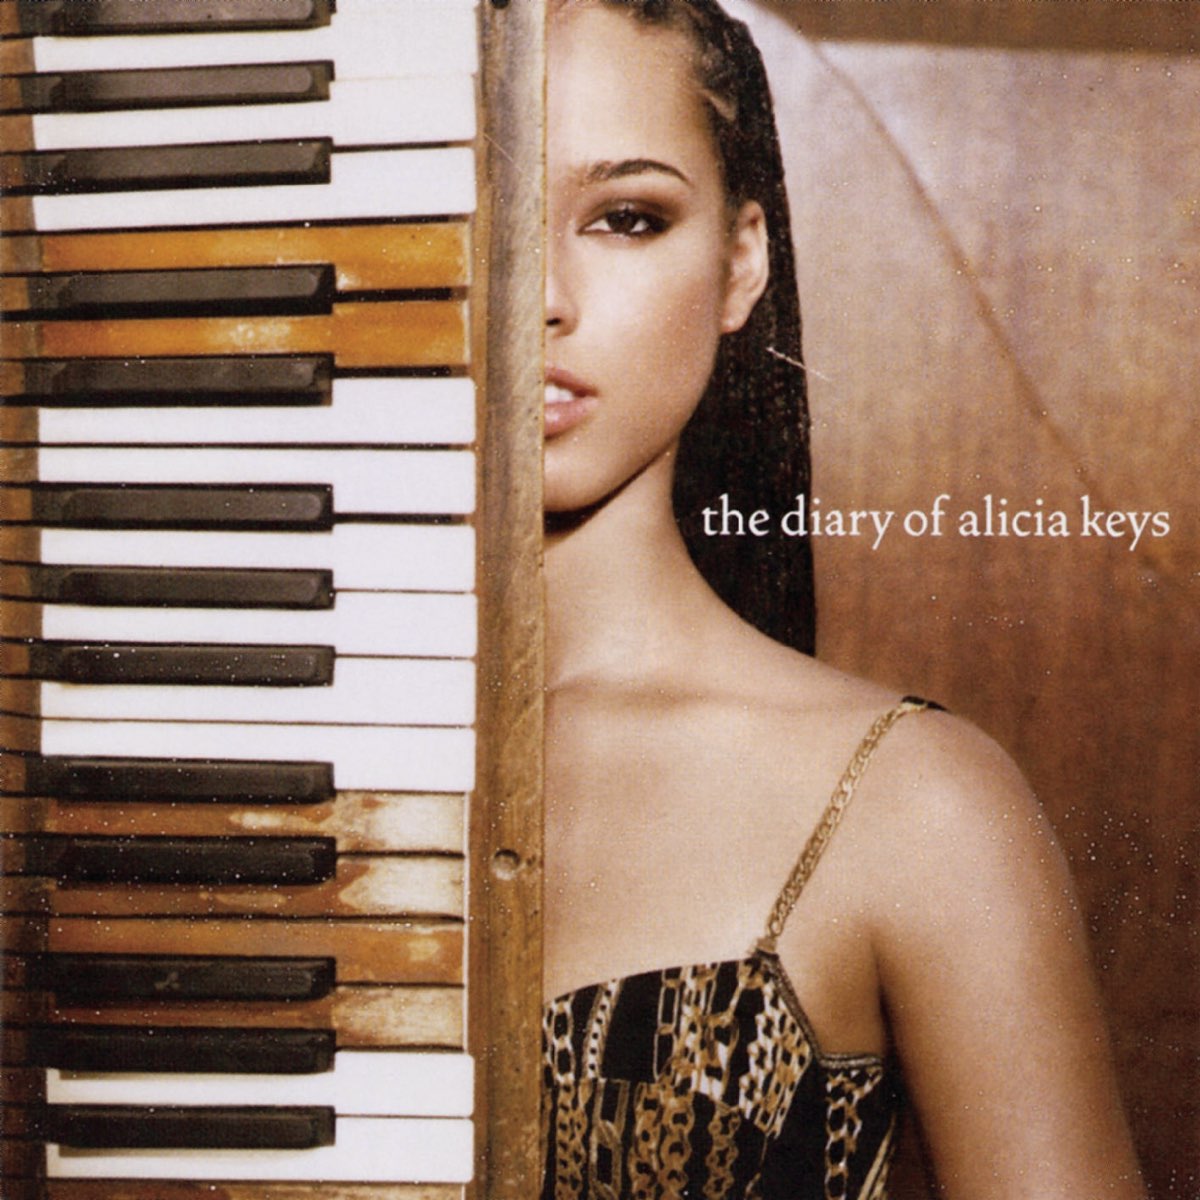 The Diary of Alicia Keys by Alicia Keys on Apple Music